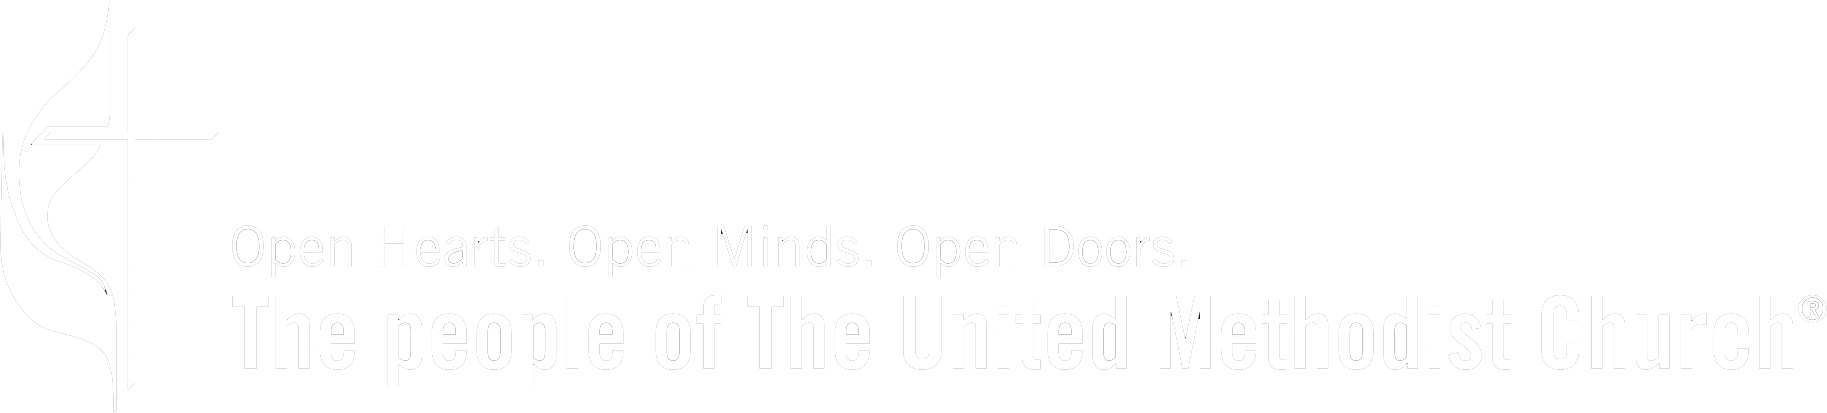 Open Minds, Open Hearts, Open Doors - The People of The United Methodist Church (horizontal logo)